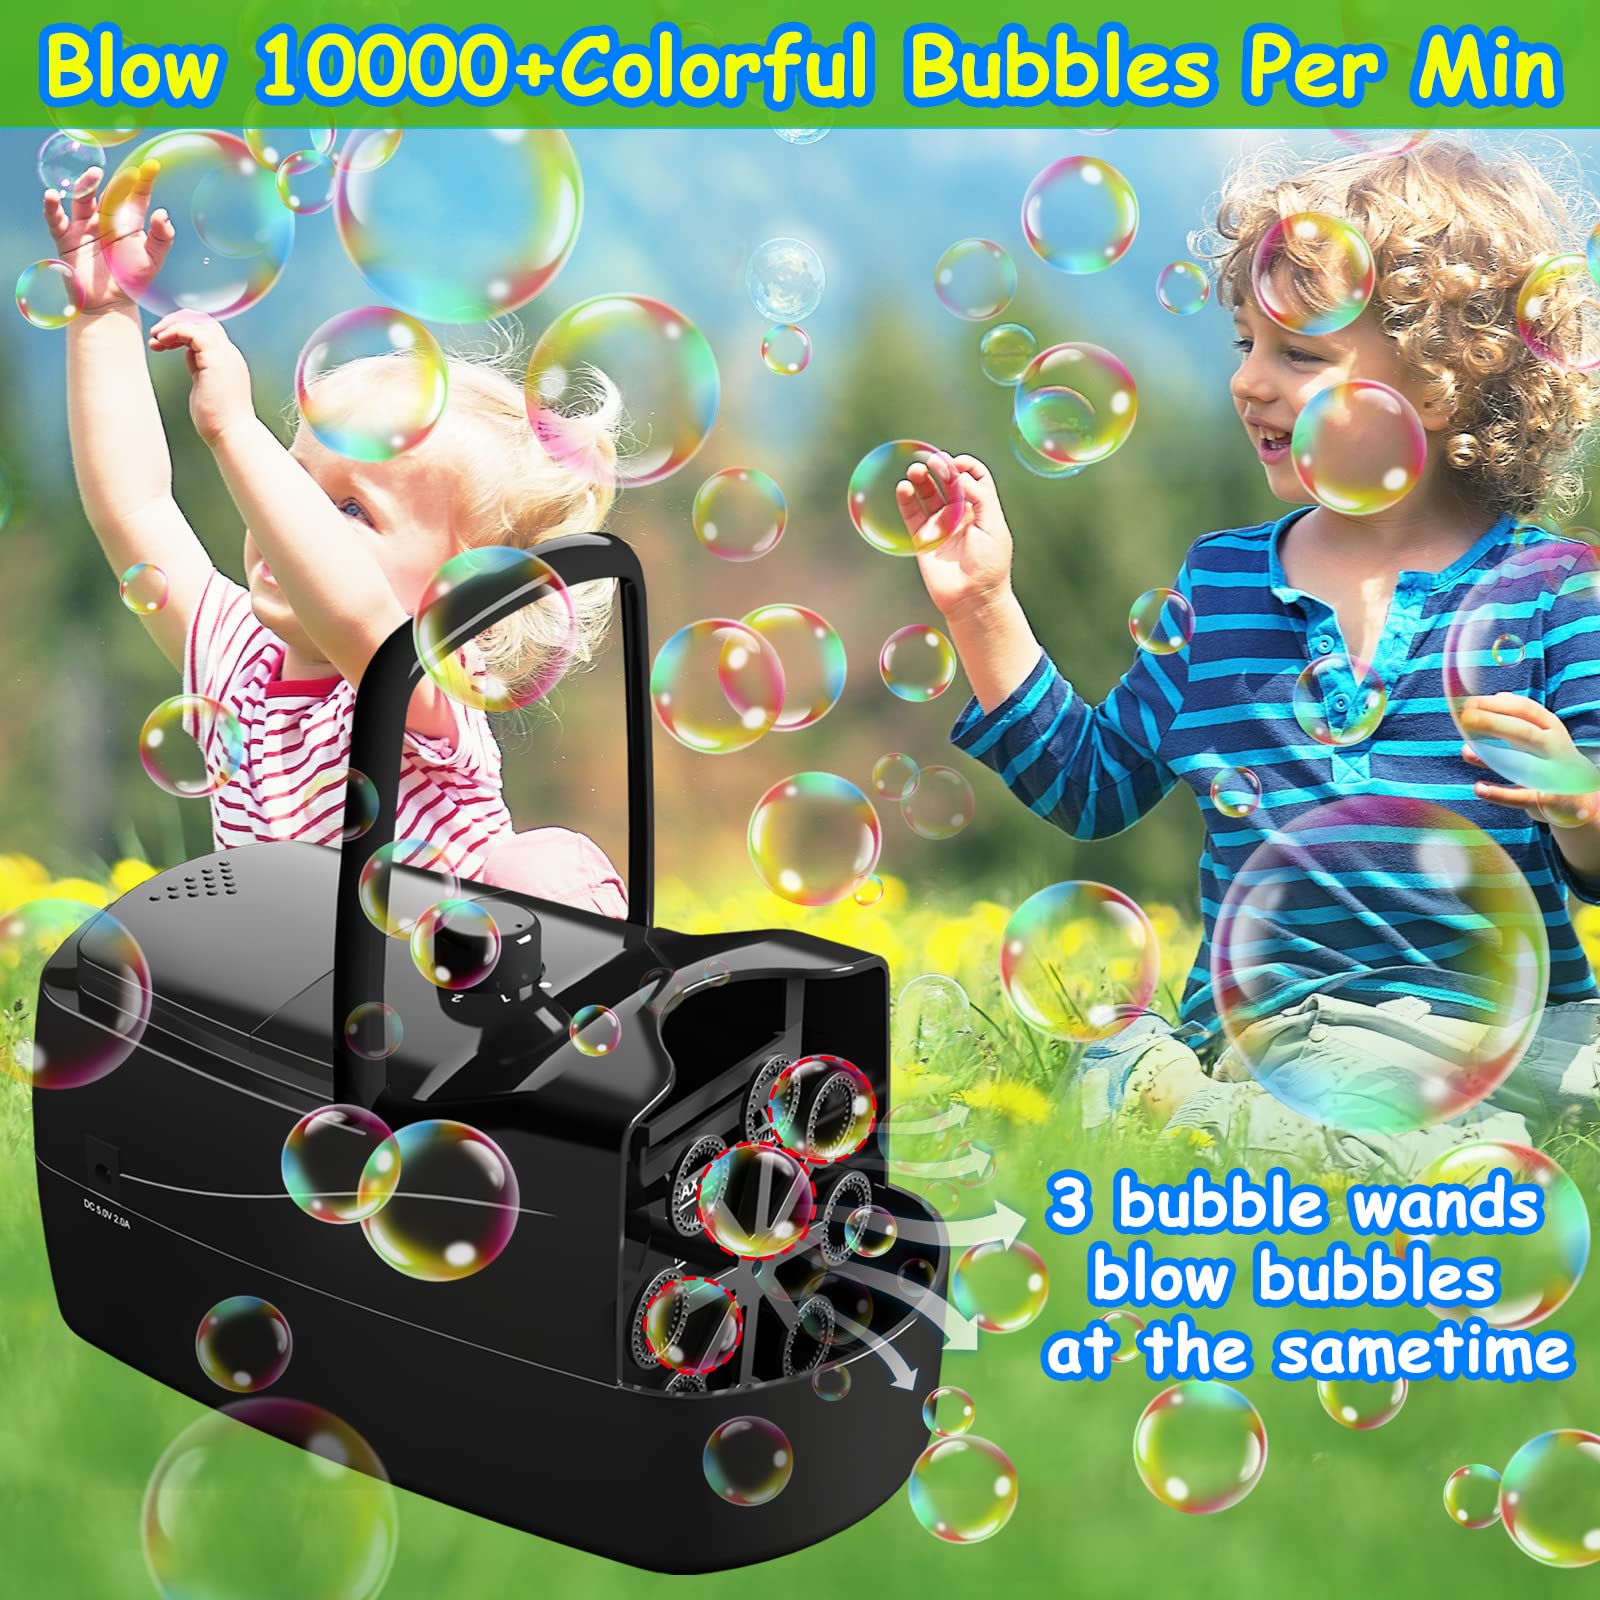 Sizonjoy Bubble Machine Automatic Bubble Blower, 10000+ Bubbles Per Minute with 2 Speeds, 8 Wands Bubble Maker, Plug-in or Batteries Bubb